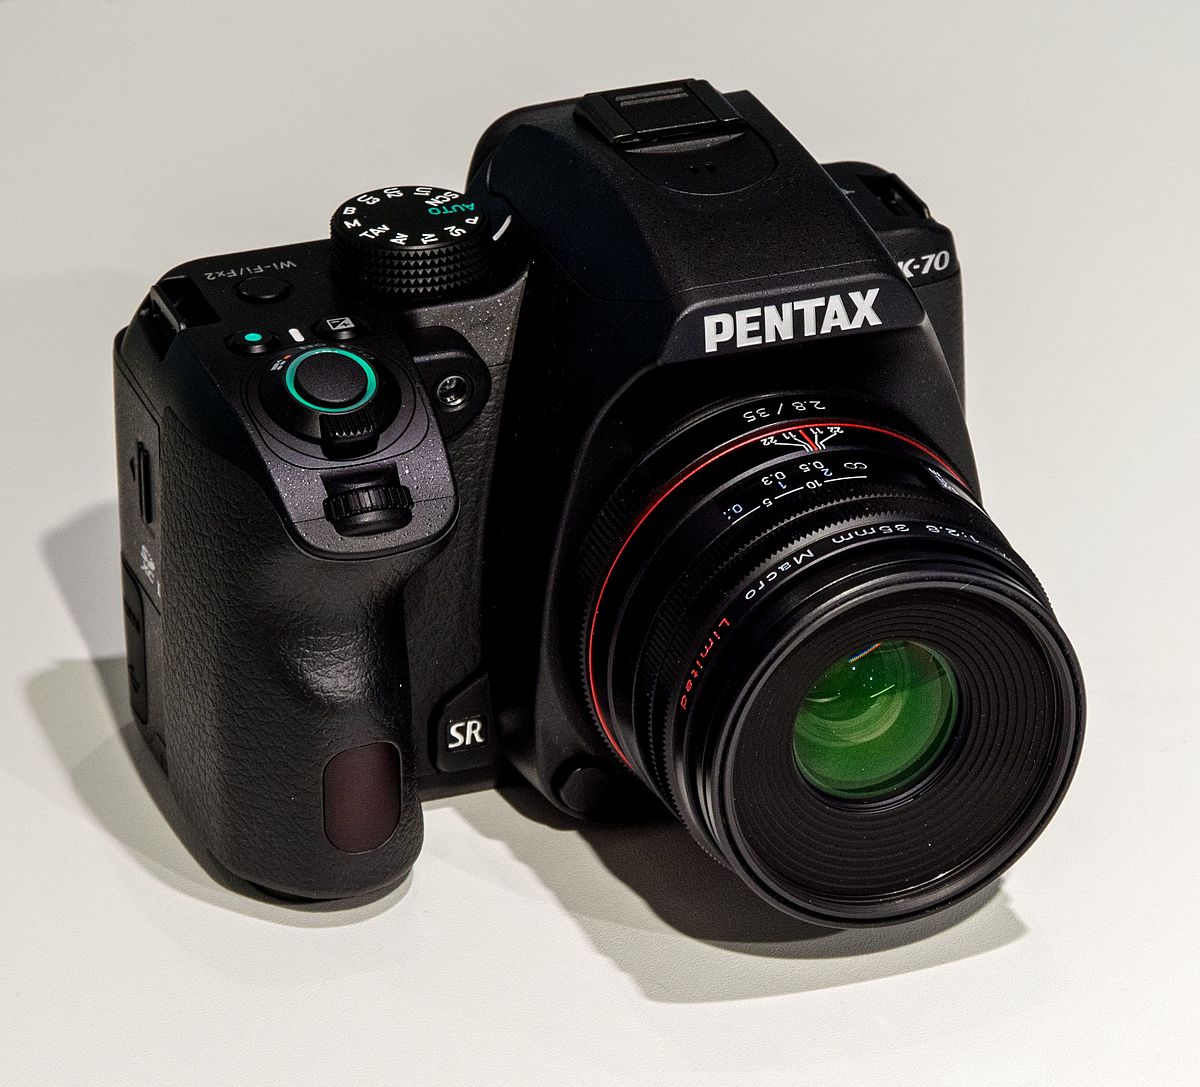 Ed Retro Tech - Where new and old tech coexist: Pentax K70 DSLR (K50